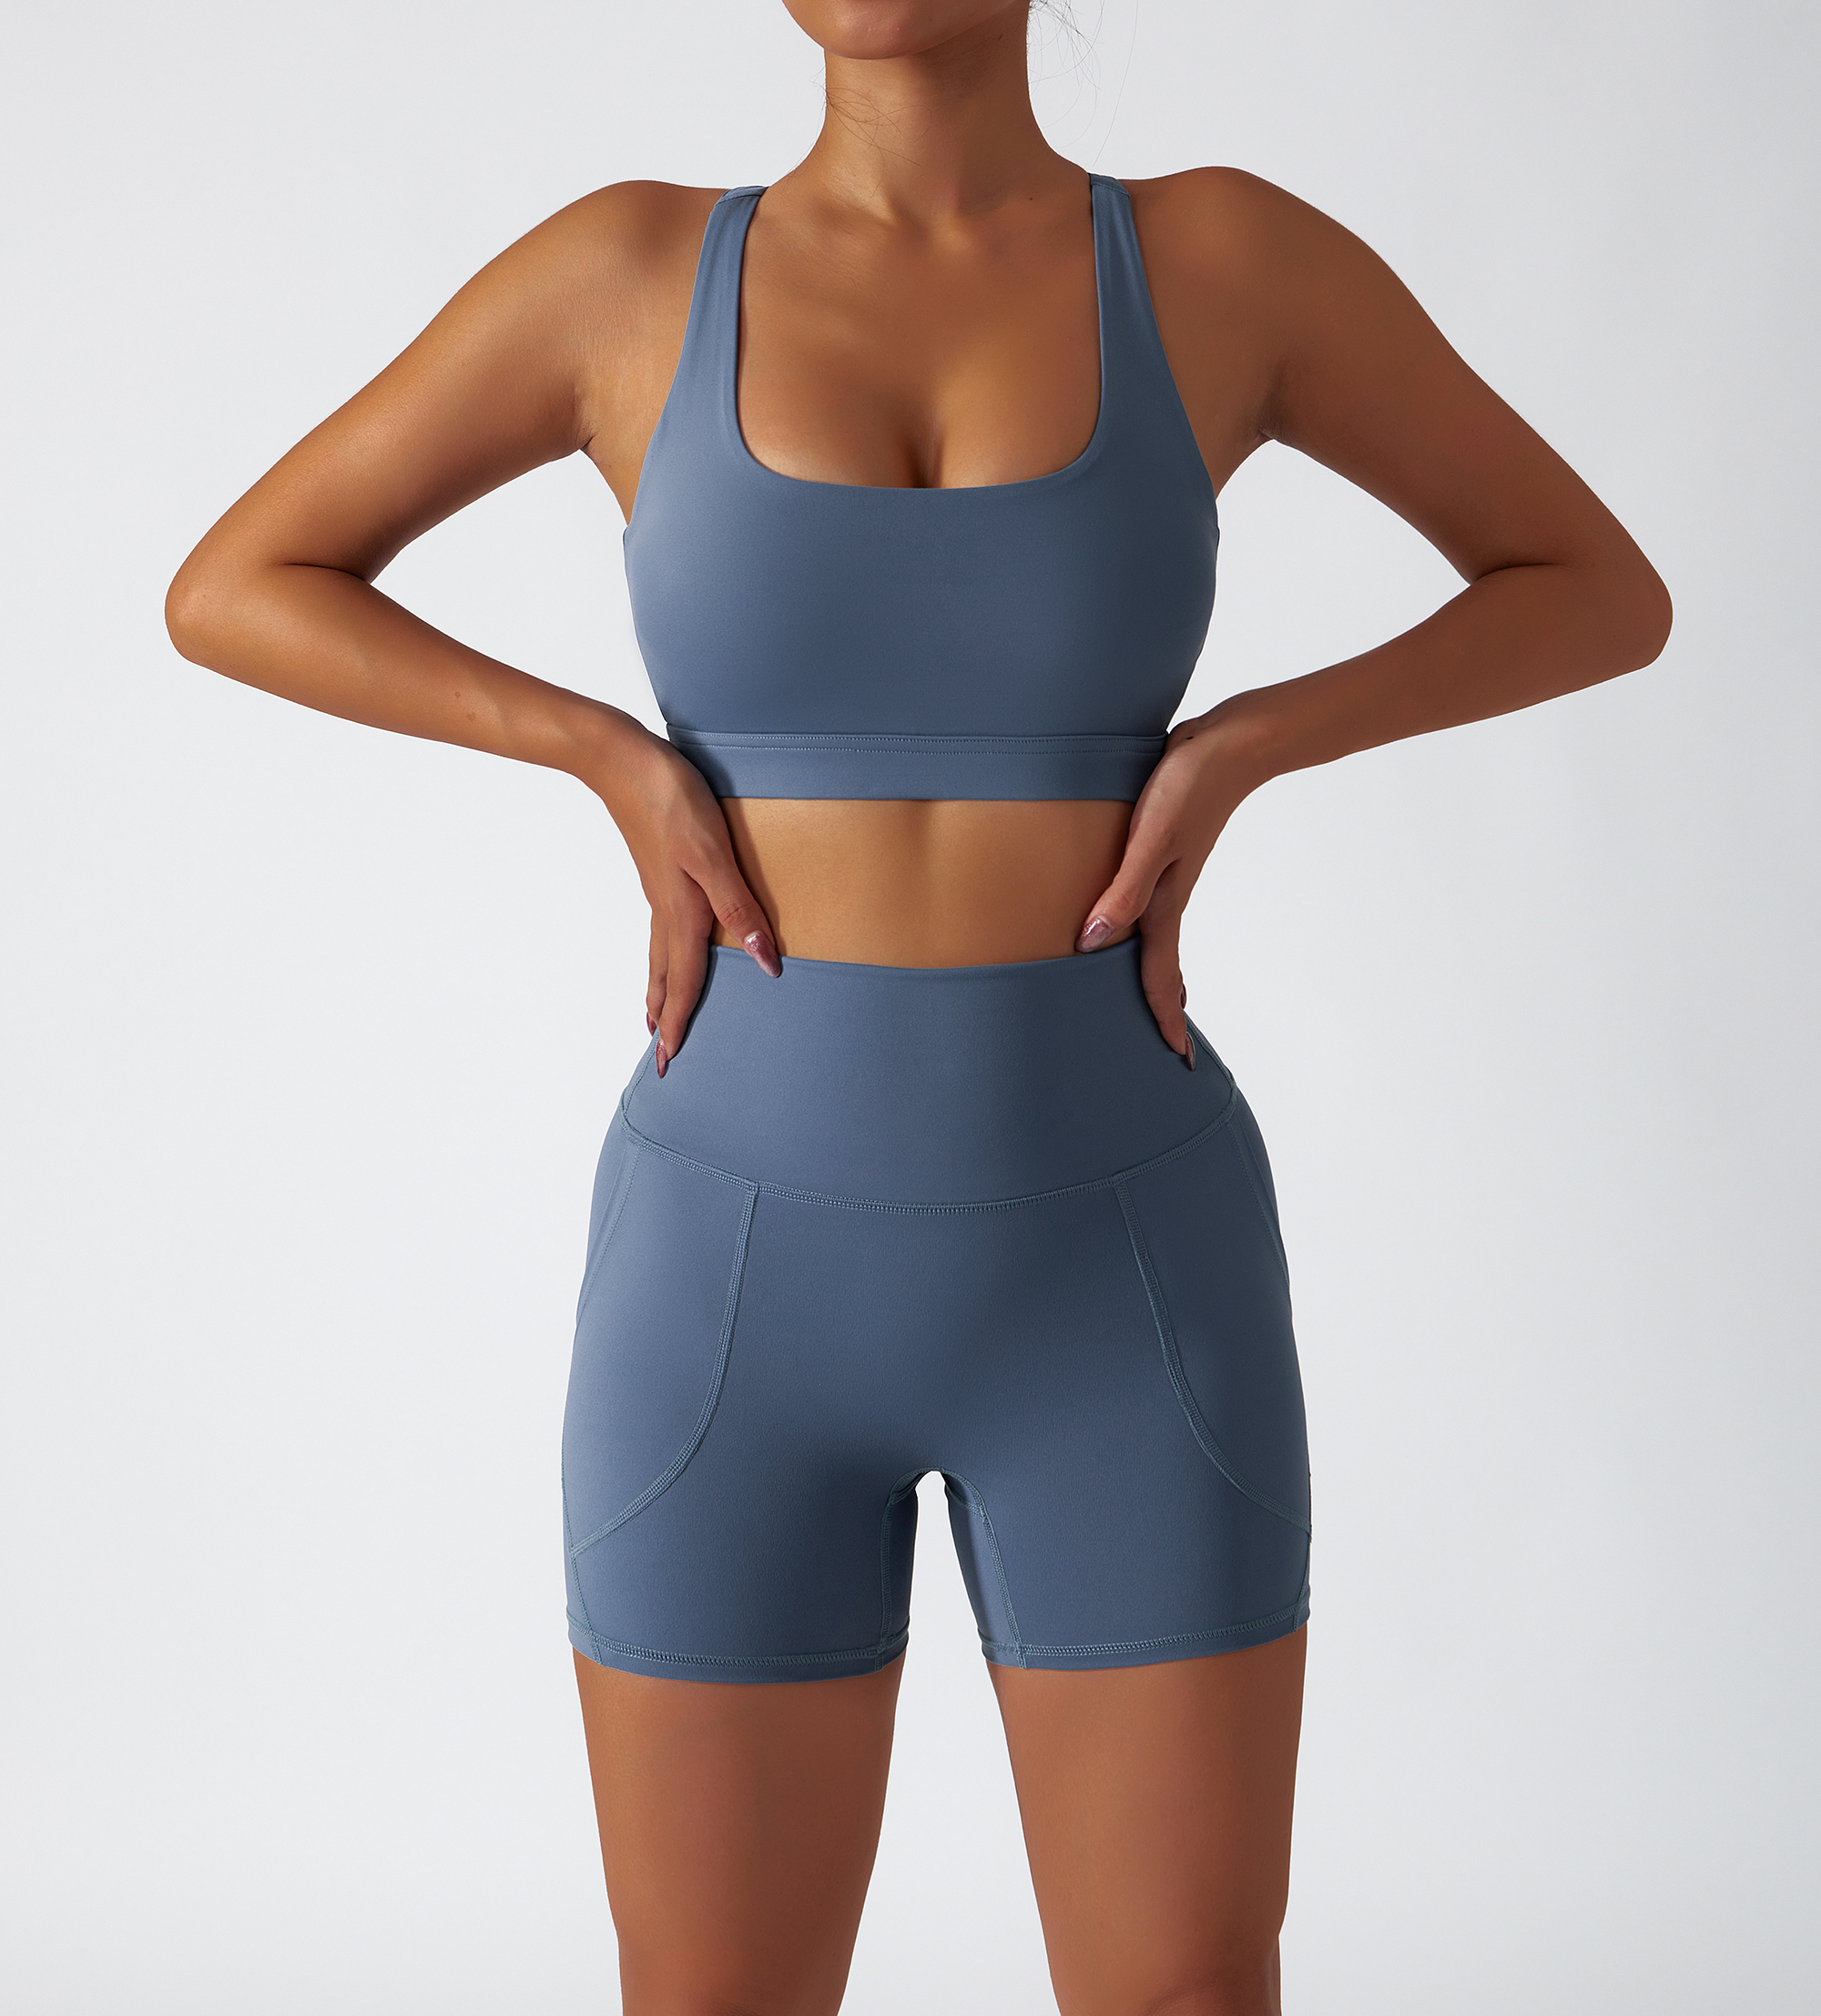 Hergymclothing blue yoga bra and sports shorts online shopping